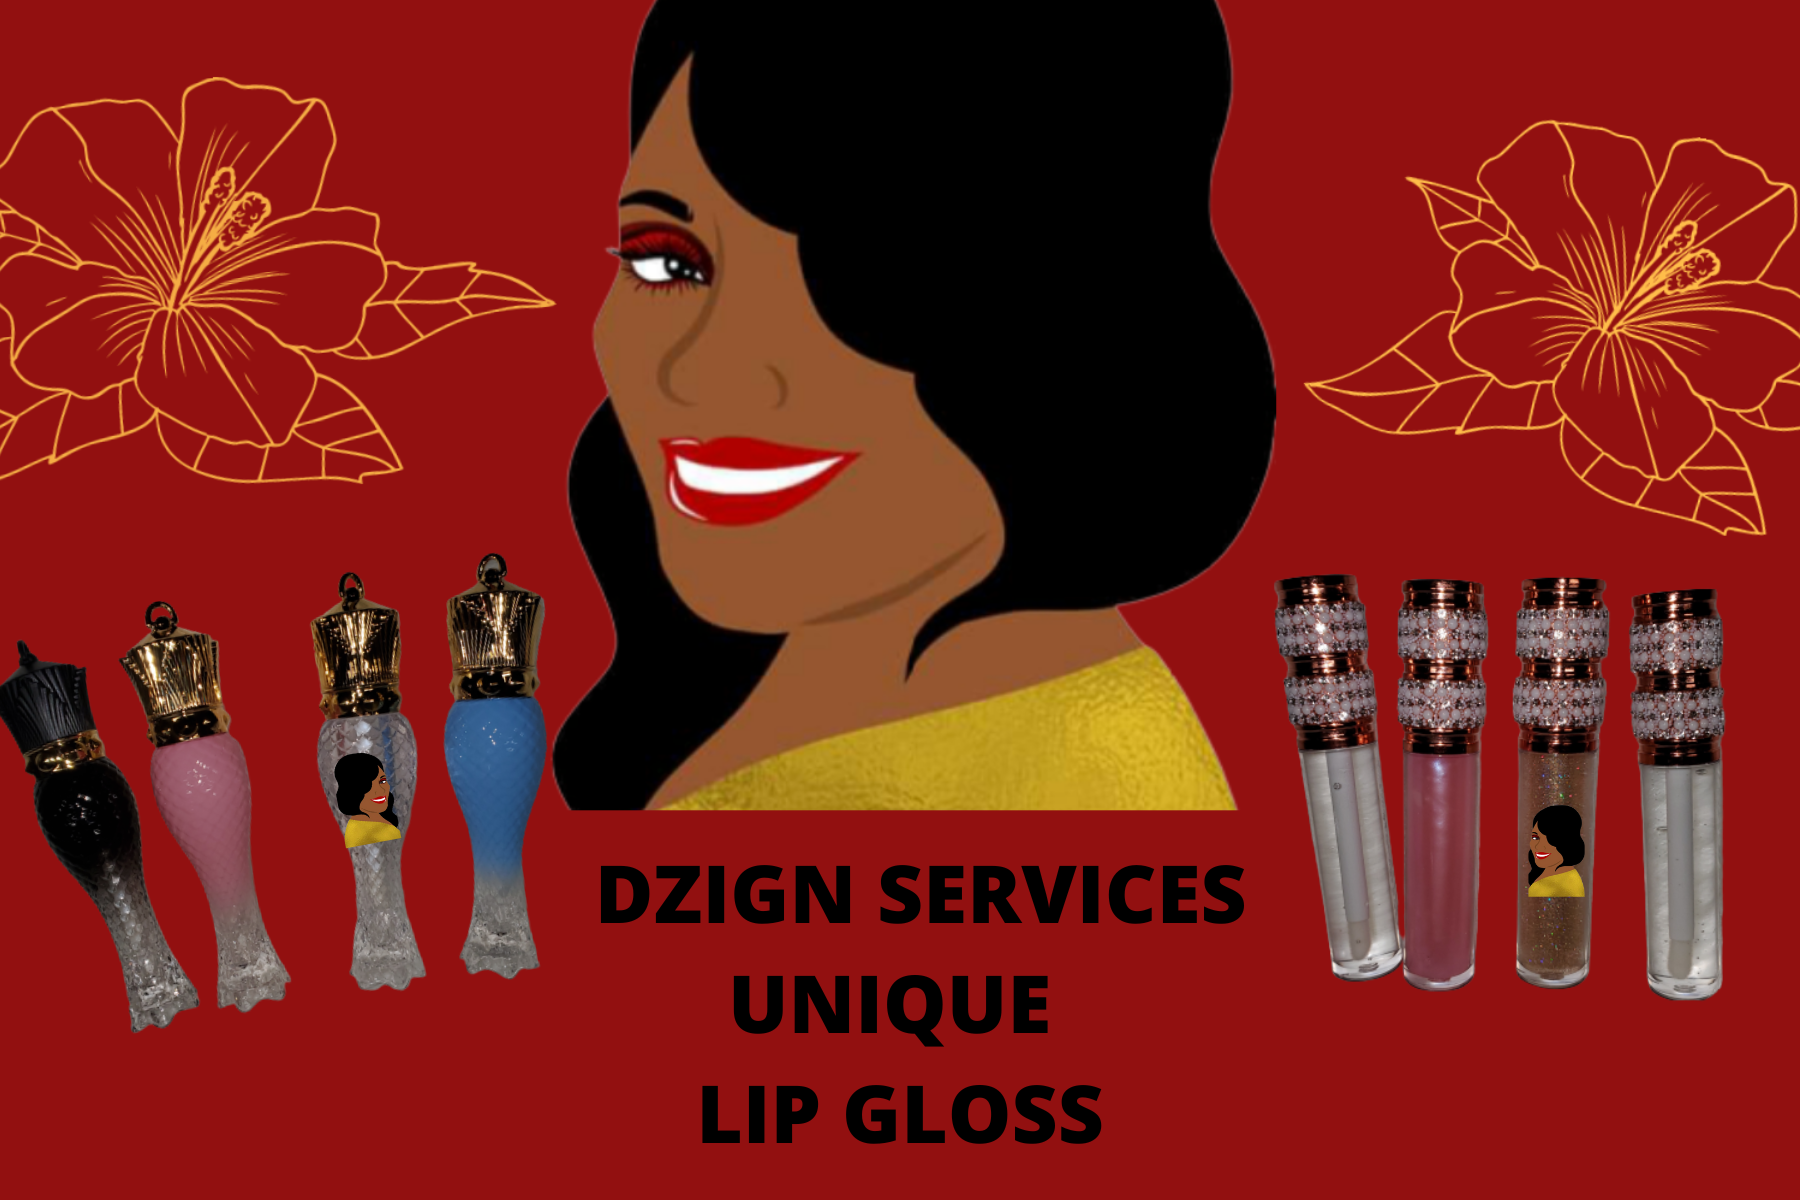 Dzign Services Unique Lip Gloss